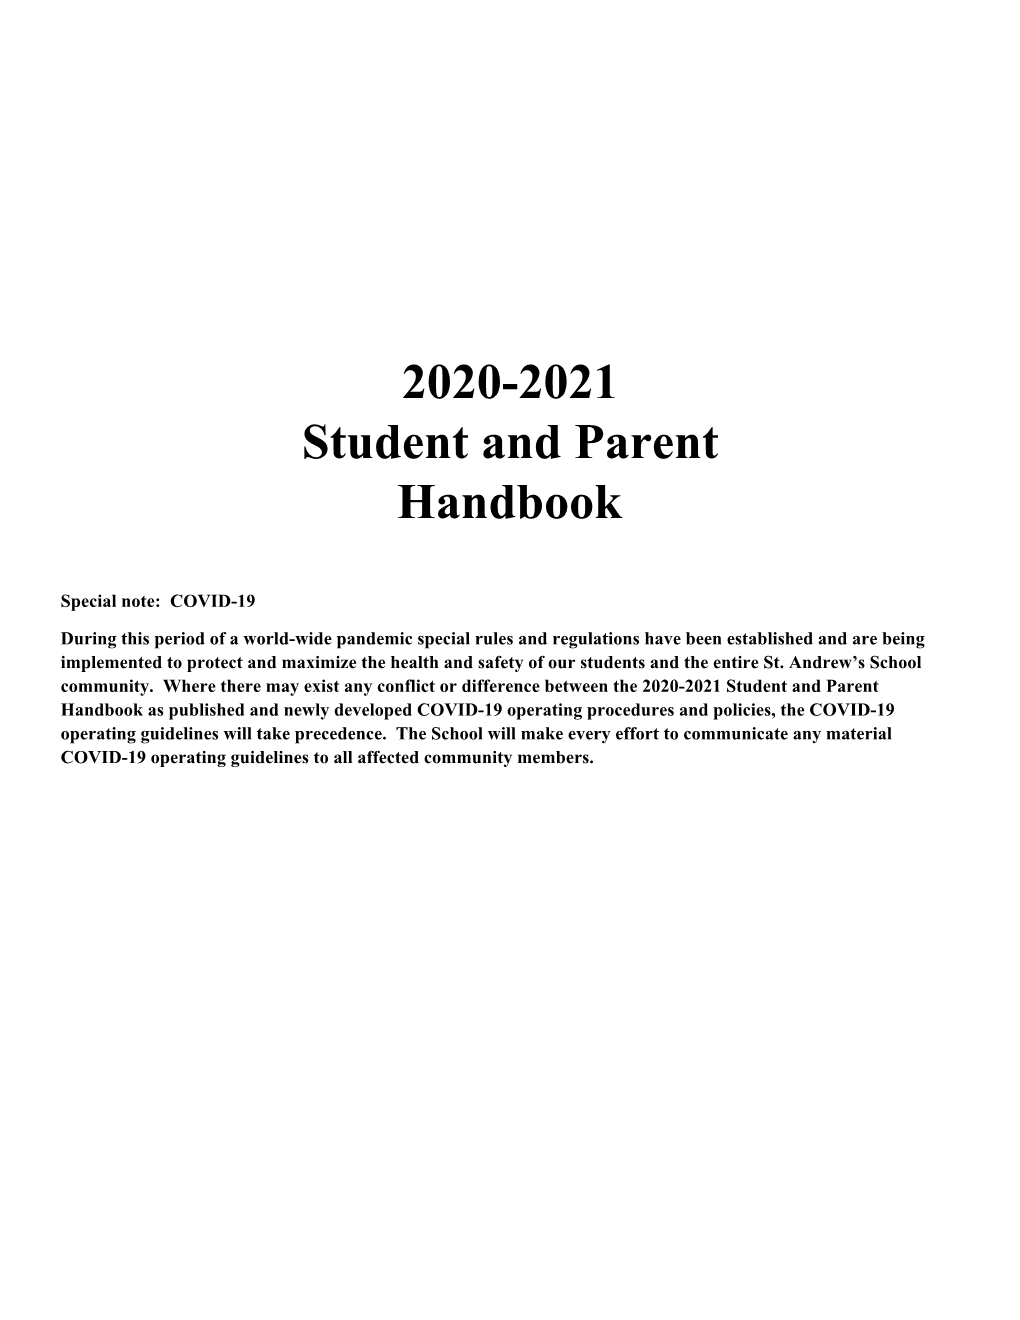 2020-2021 Student and Parent Handbook